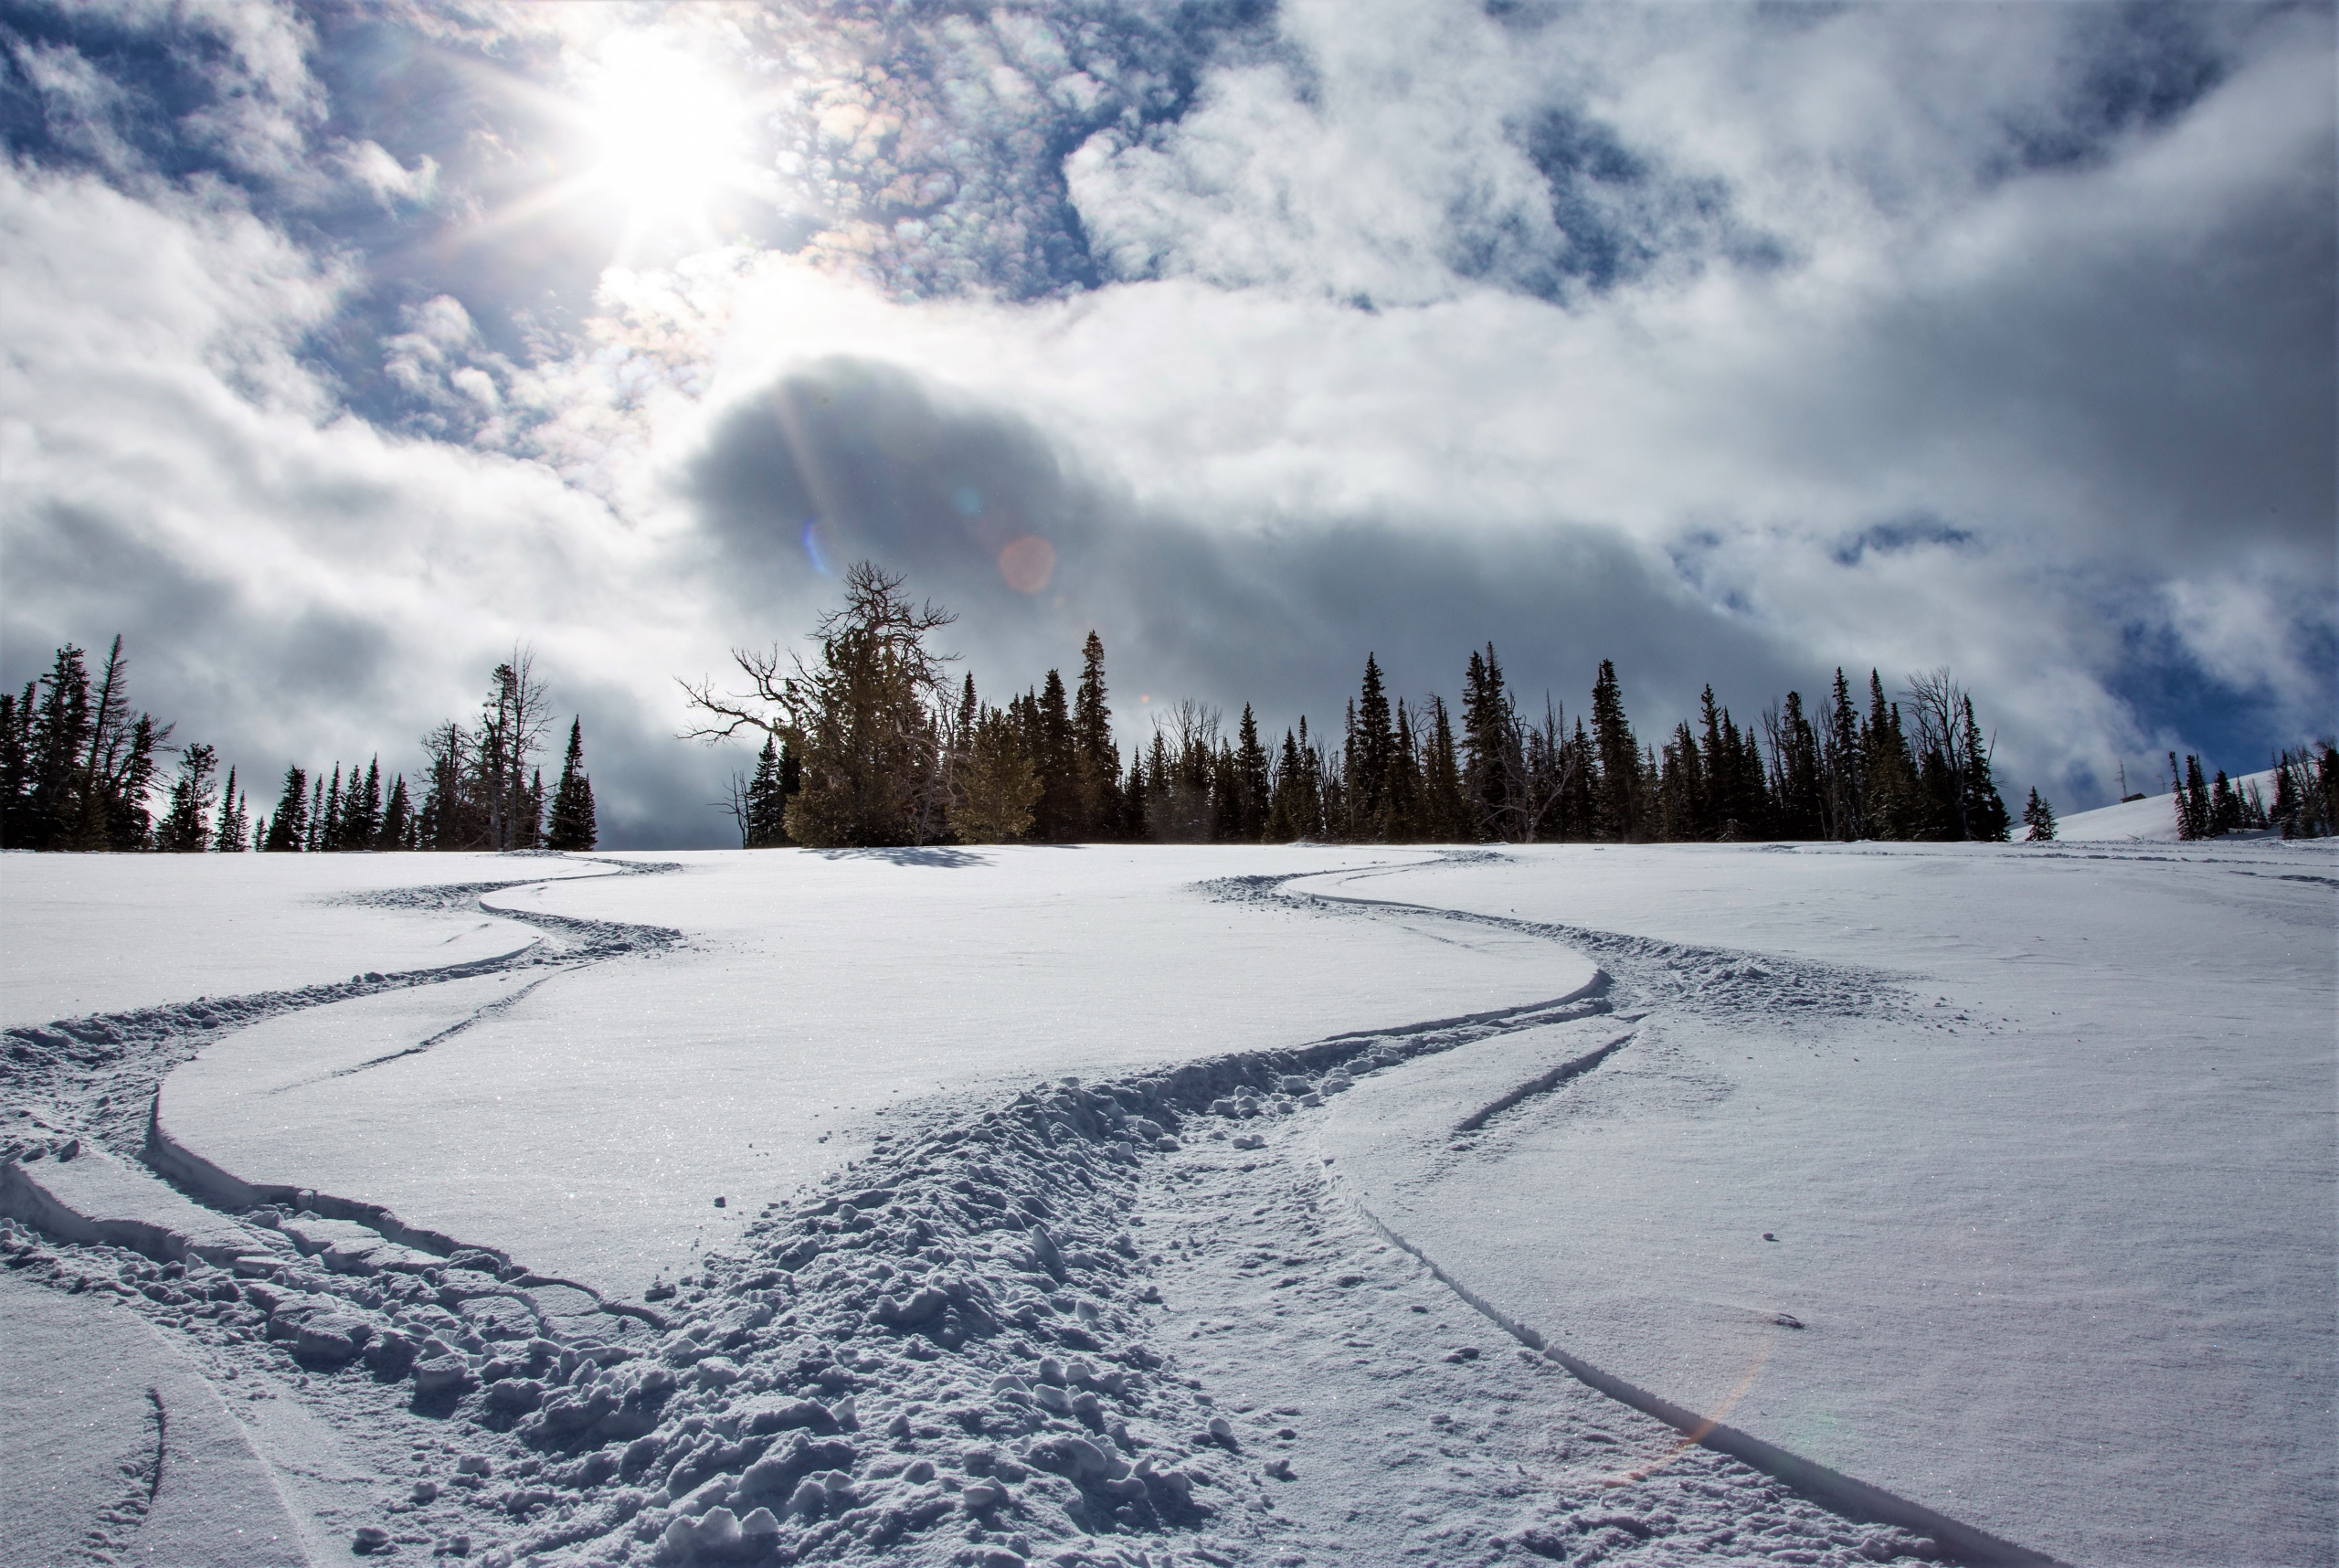 Two fresh ski tracks through the powder